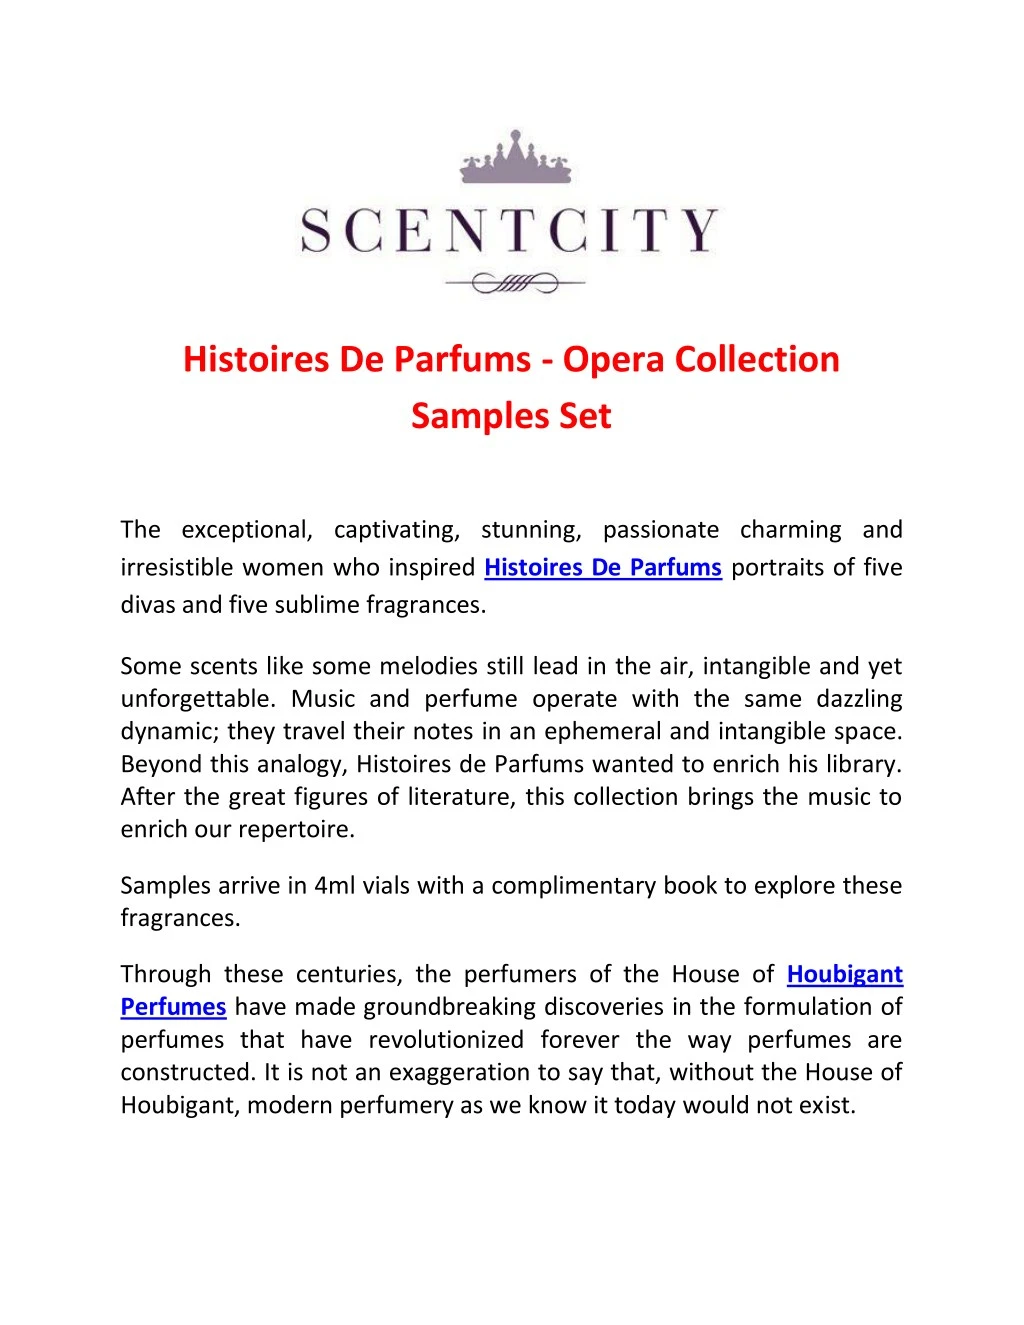 histoires de parfums opera collection samples set